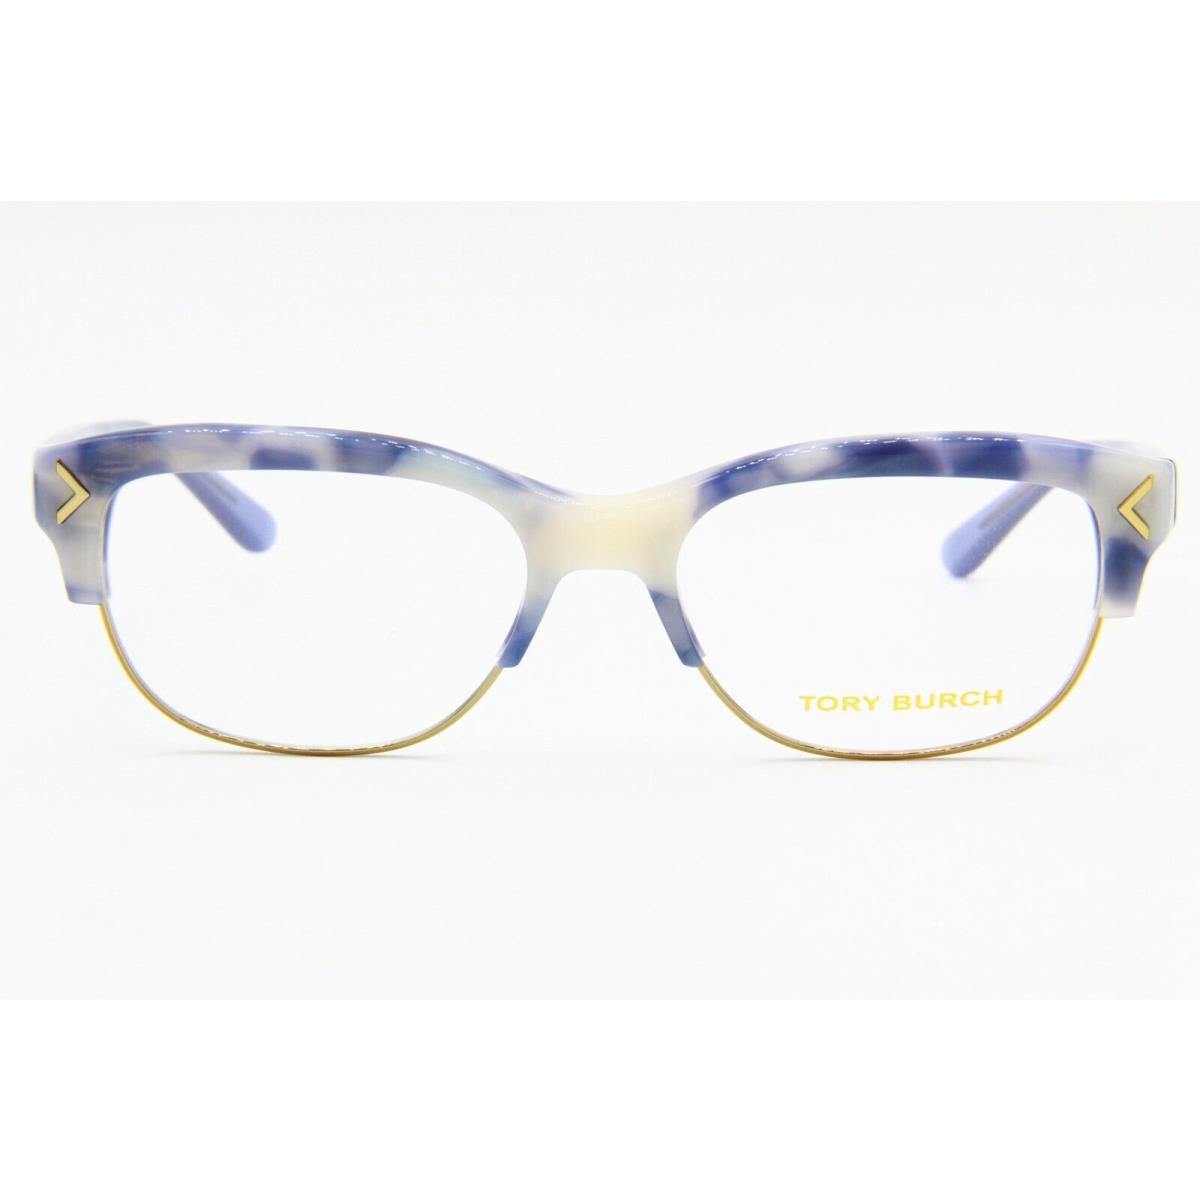 Tory Burch eyeglasses  - Blue Frame 0